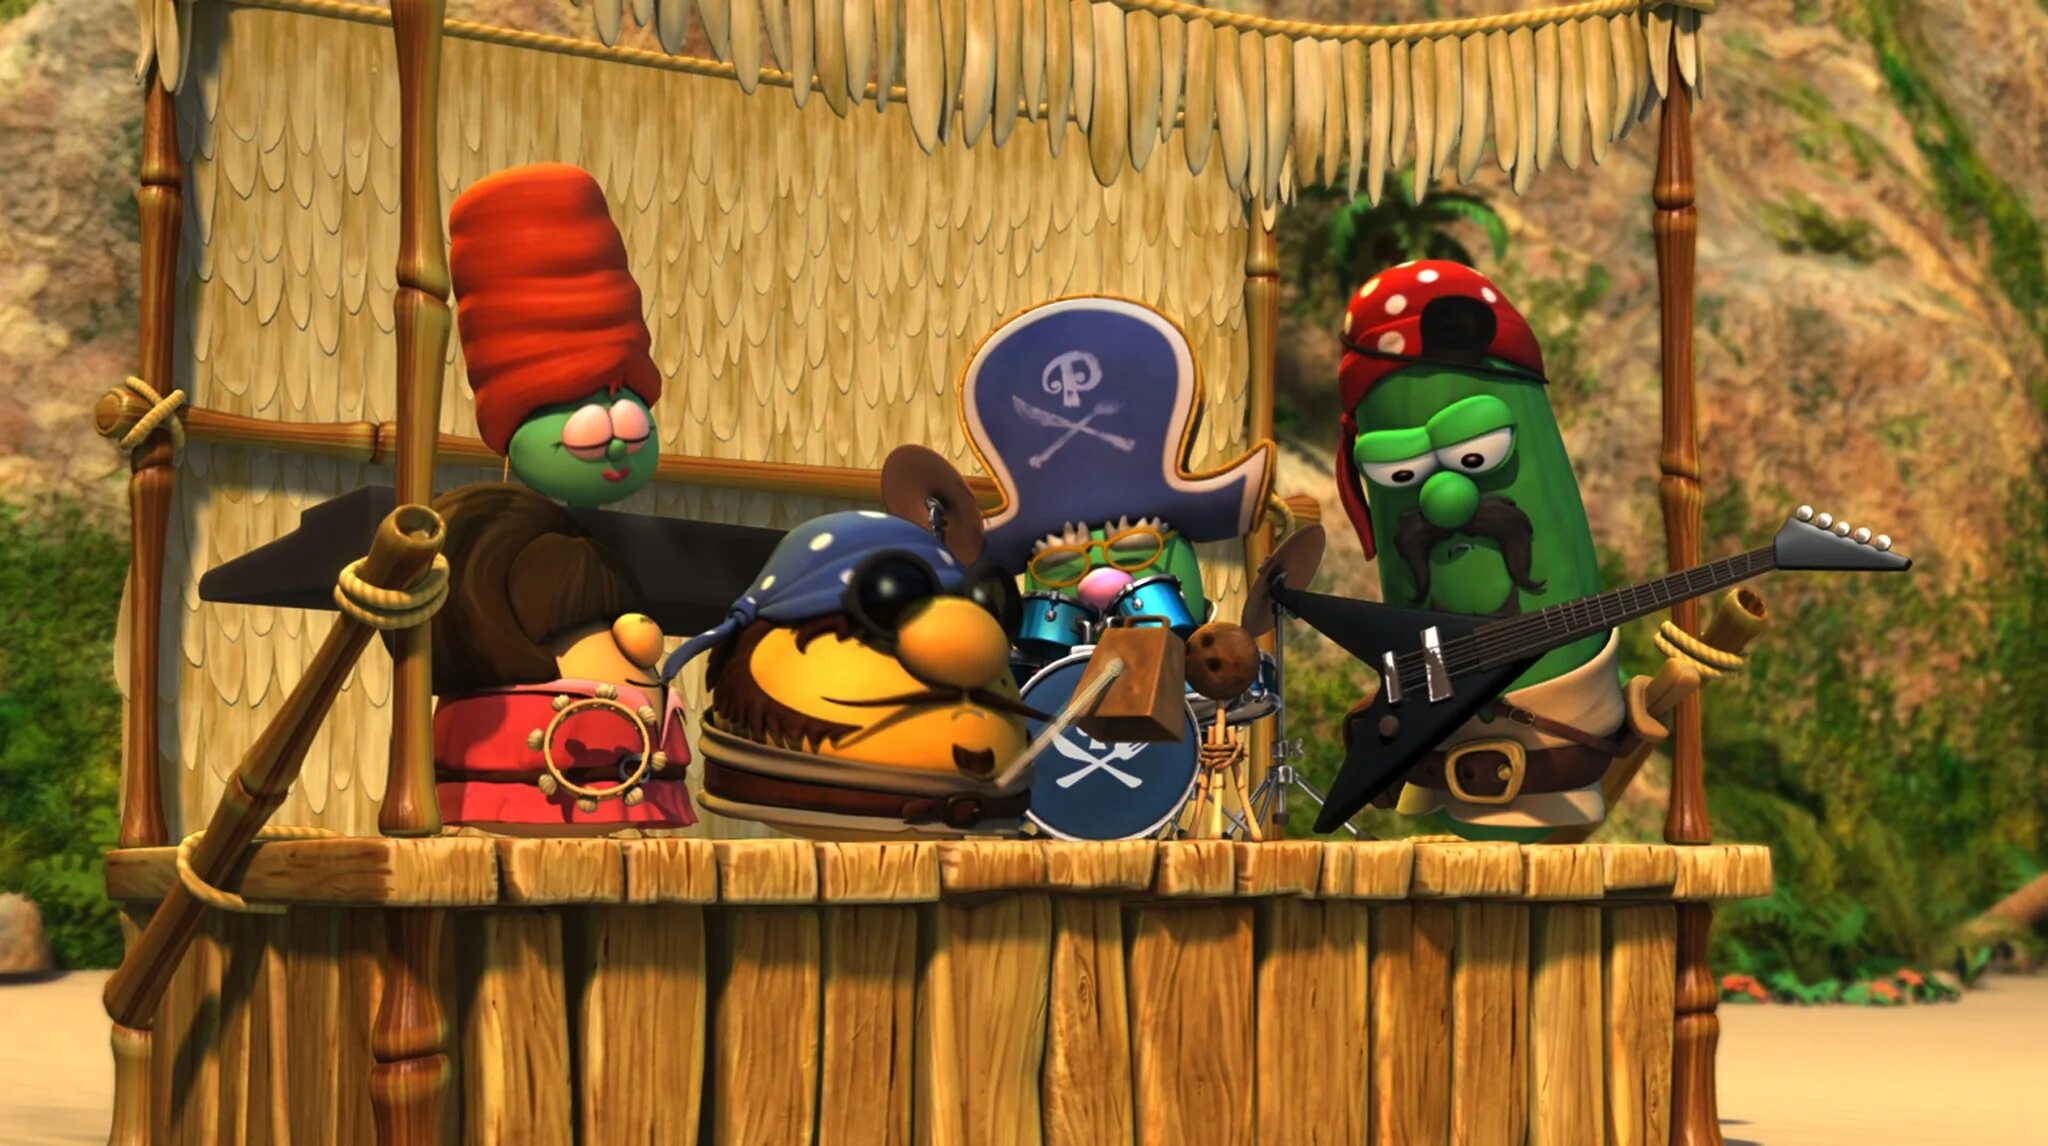 Veggietales игра пираты. Приключения пиратов в стране овощей 2. Приключения пиратов в стране овощей. Приключения пиратов в стране овощей 2008. Приключения пиратов игра